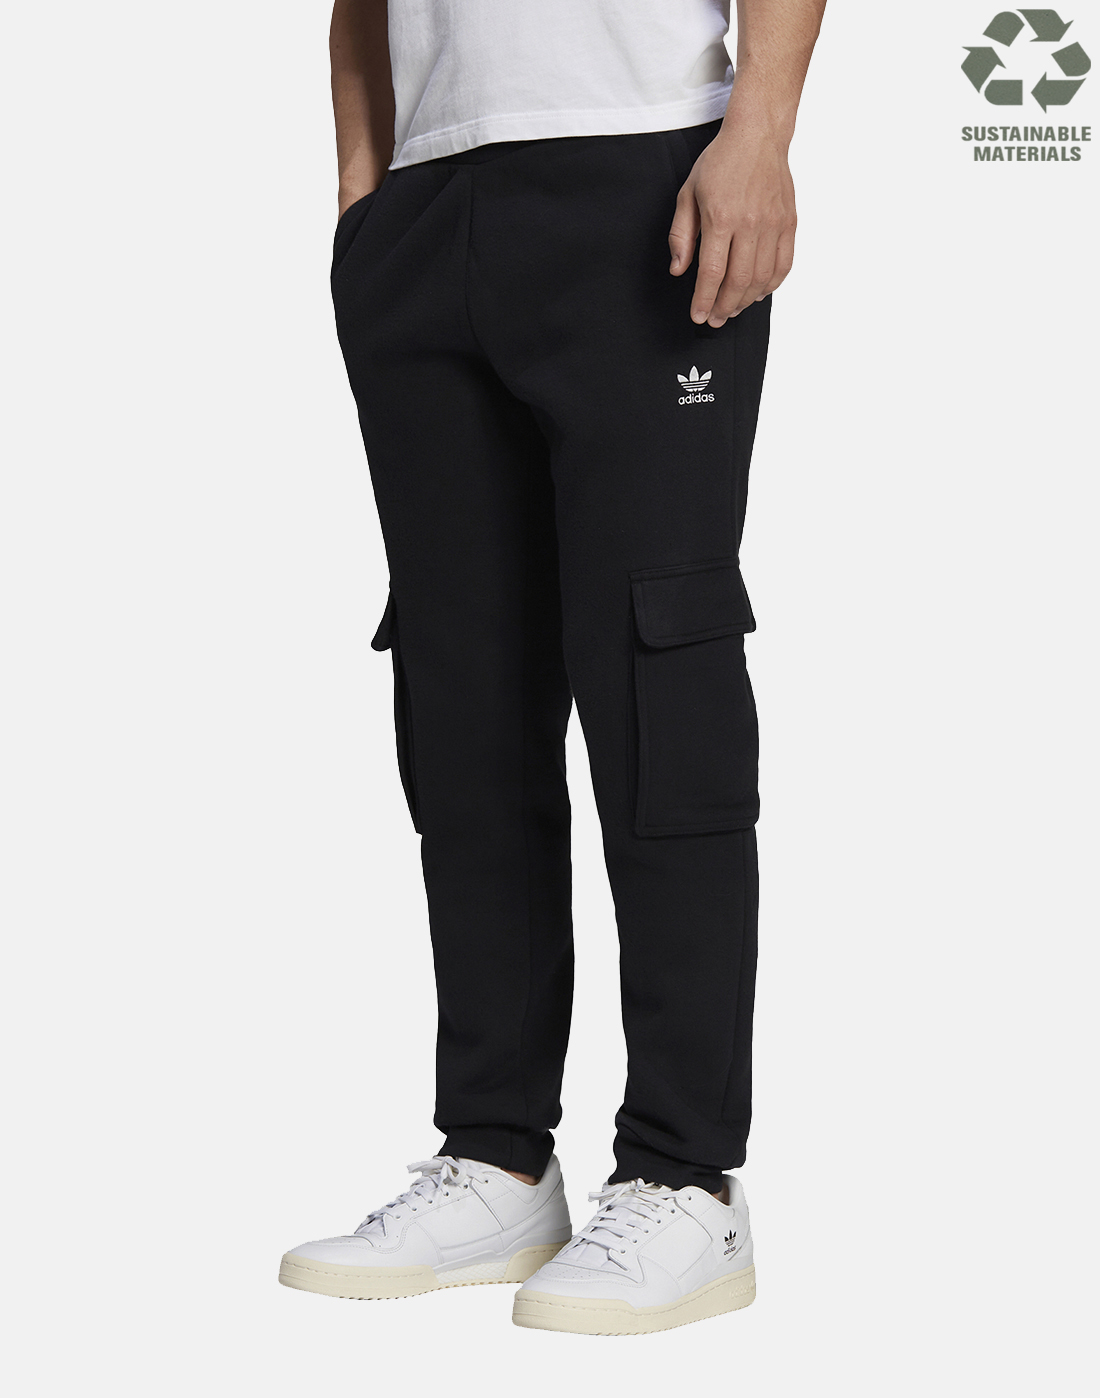 adidas Originals Always Original Laced Cuff Pants (Plus Size) Women's | eBay